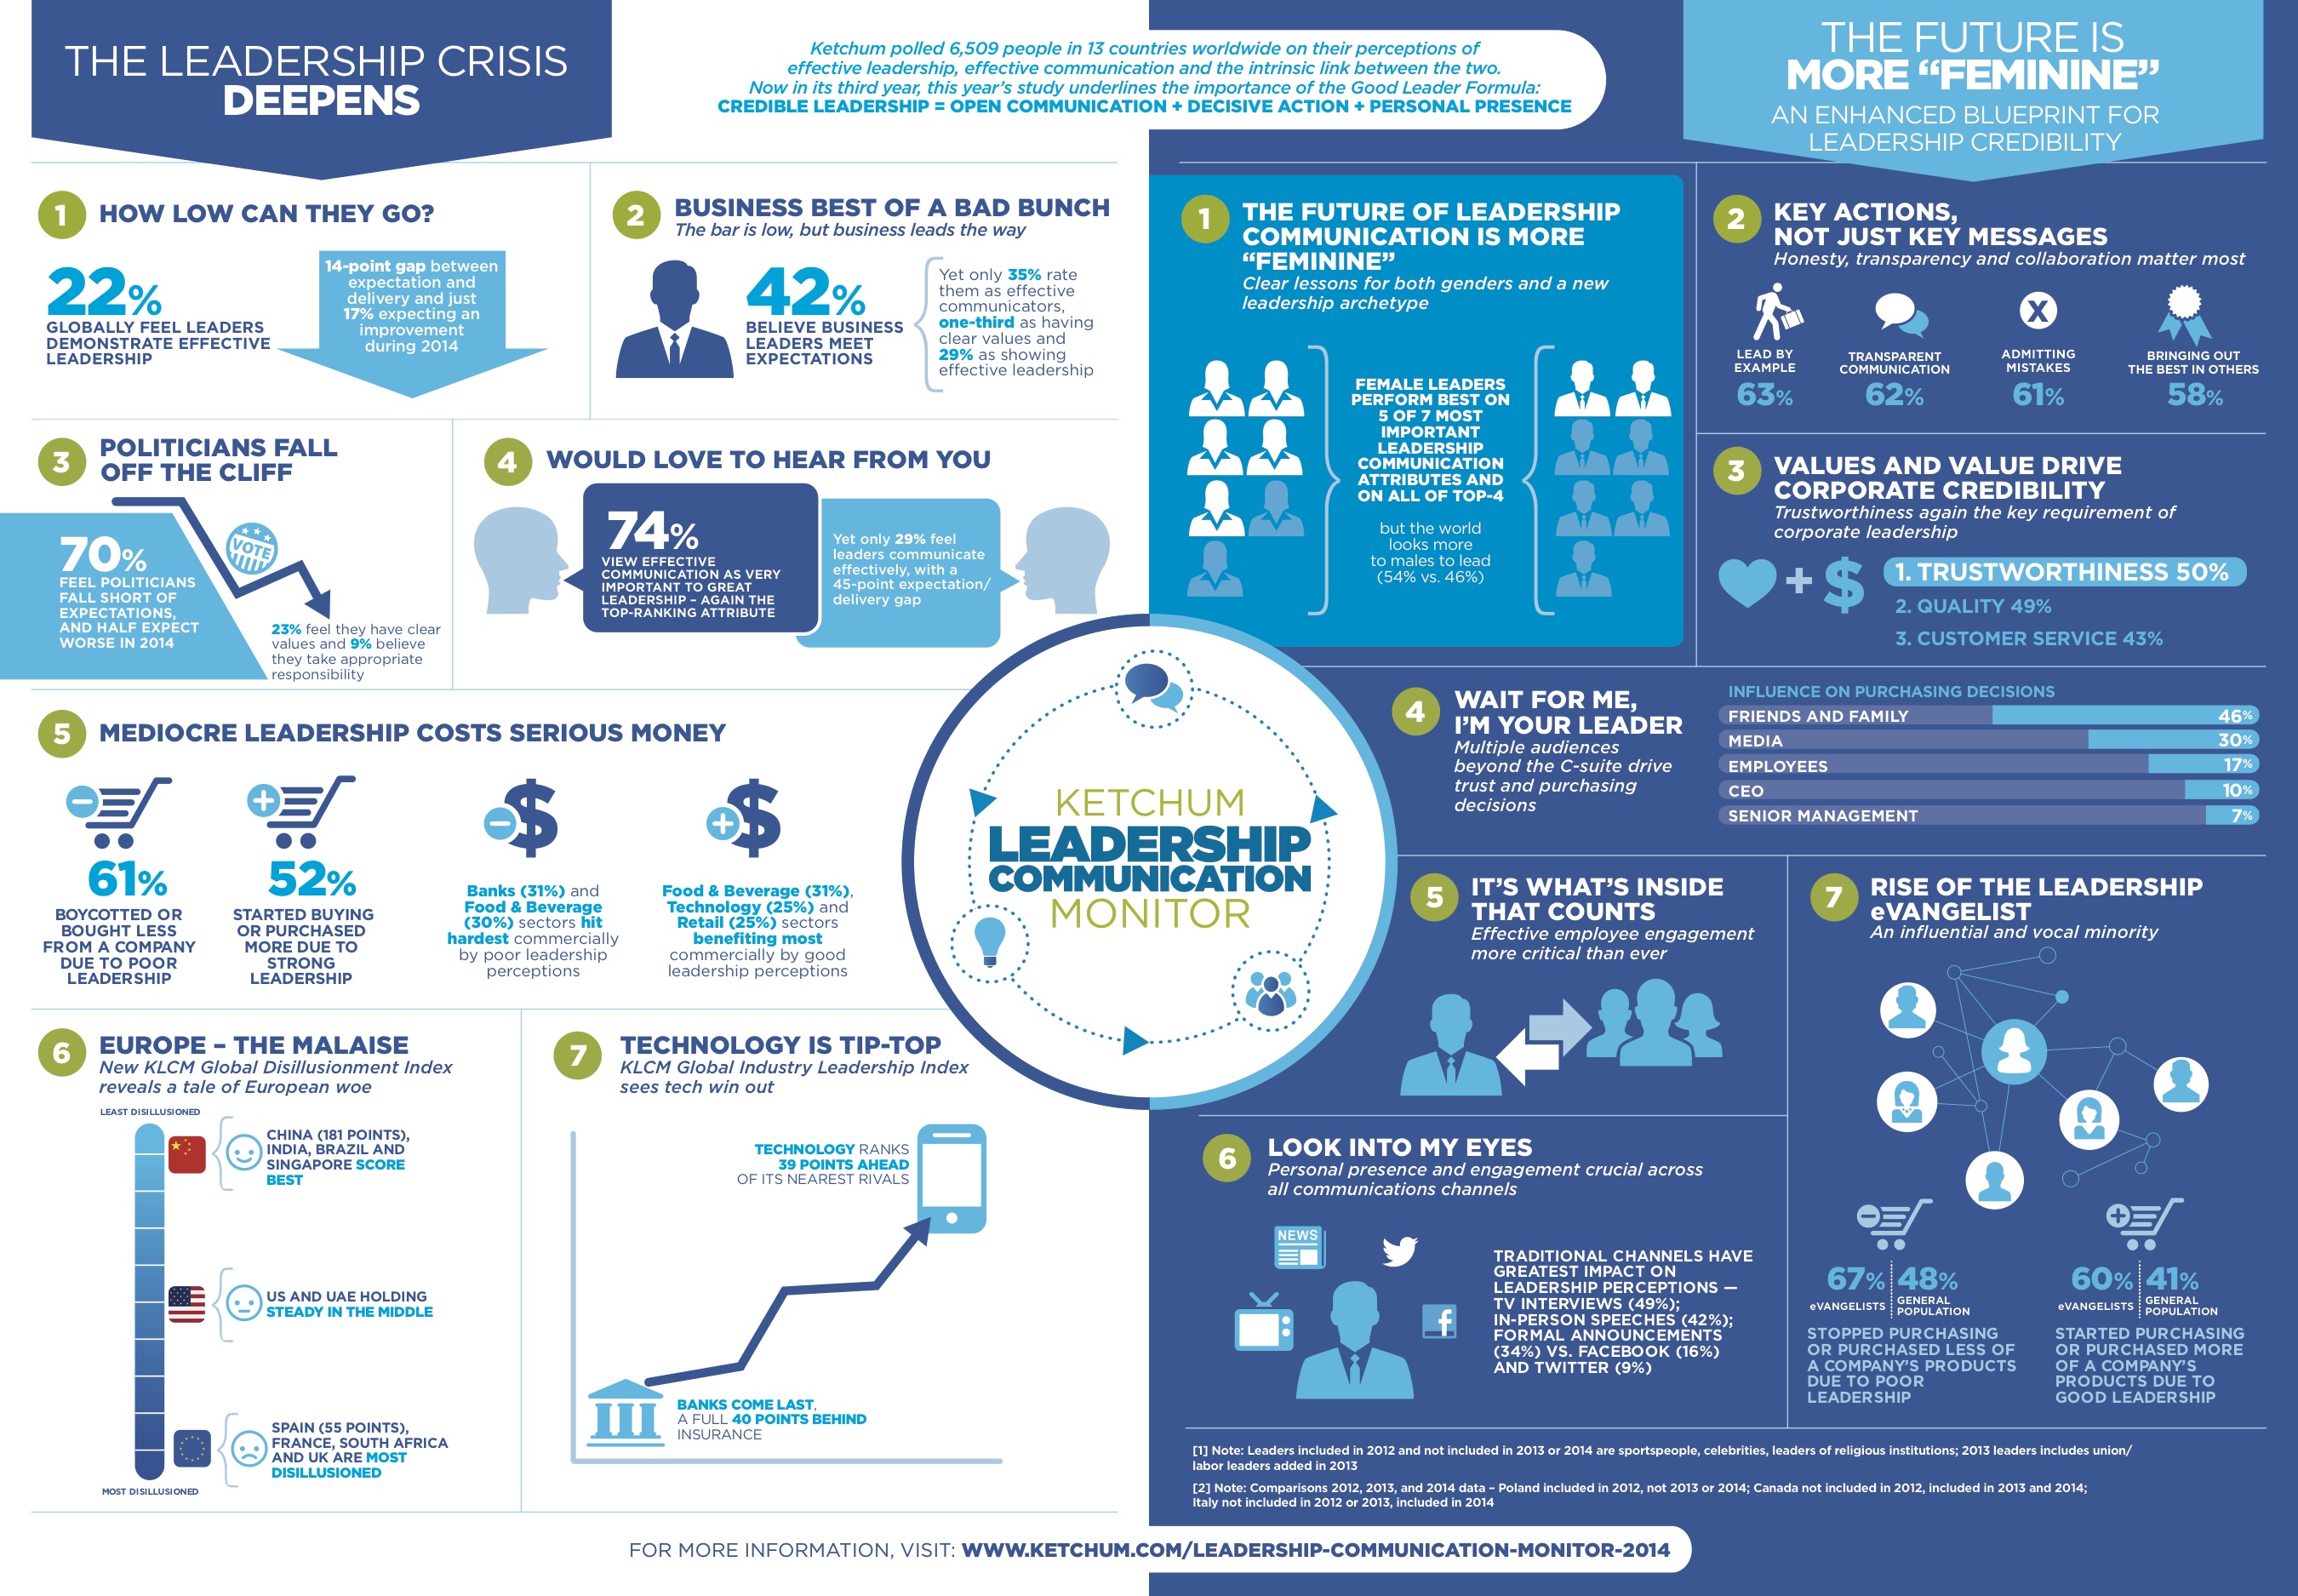 klcm_infographic_the_future_leadership_is_more_feminine